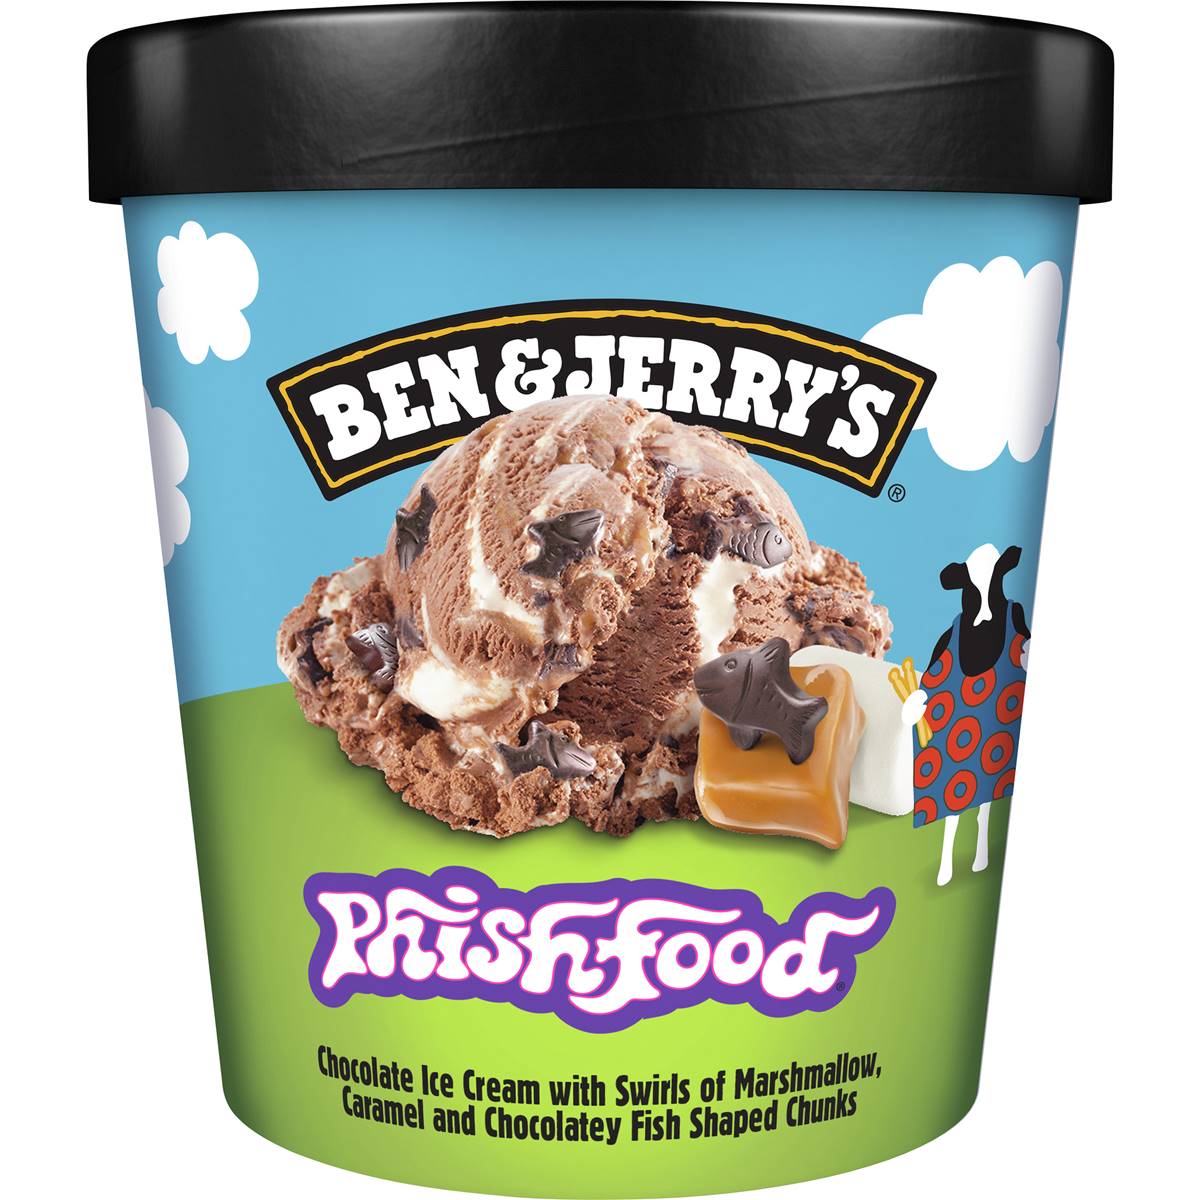 Calories in Ben & Jerry's Phish Food Chocolate Ice Cream